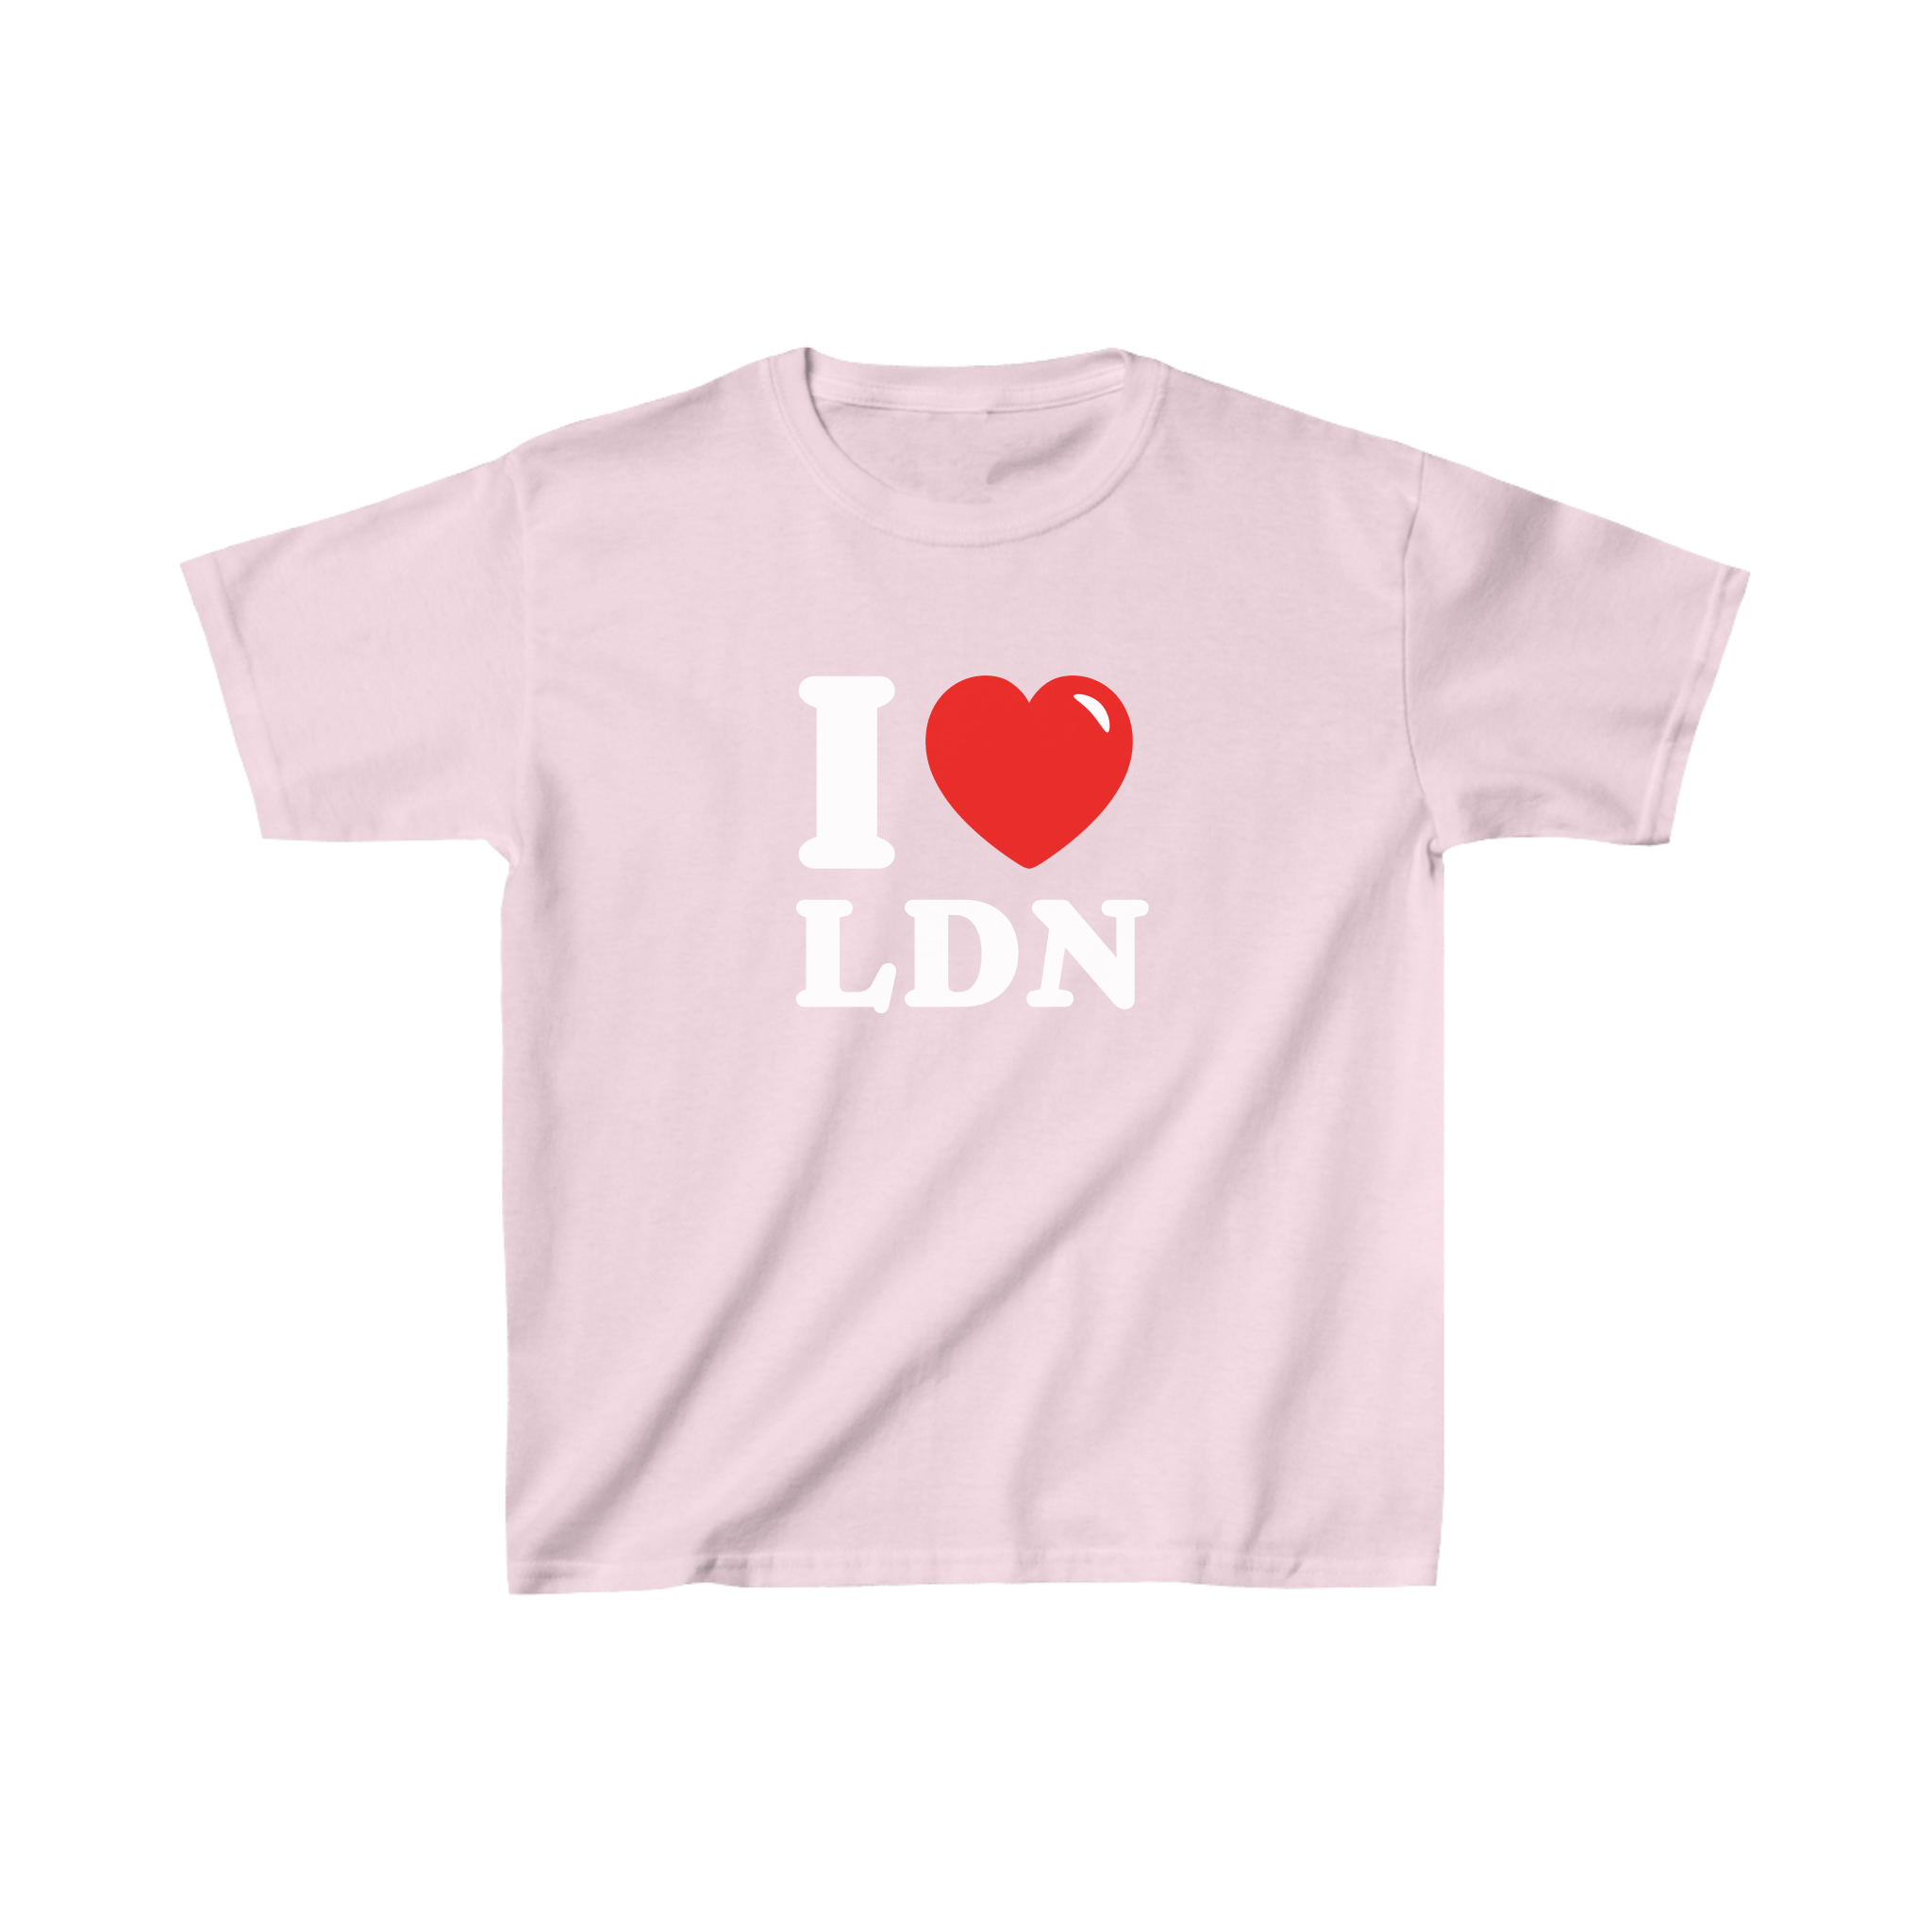 'I love LDN' baby tee - In Print We Trust